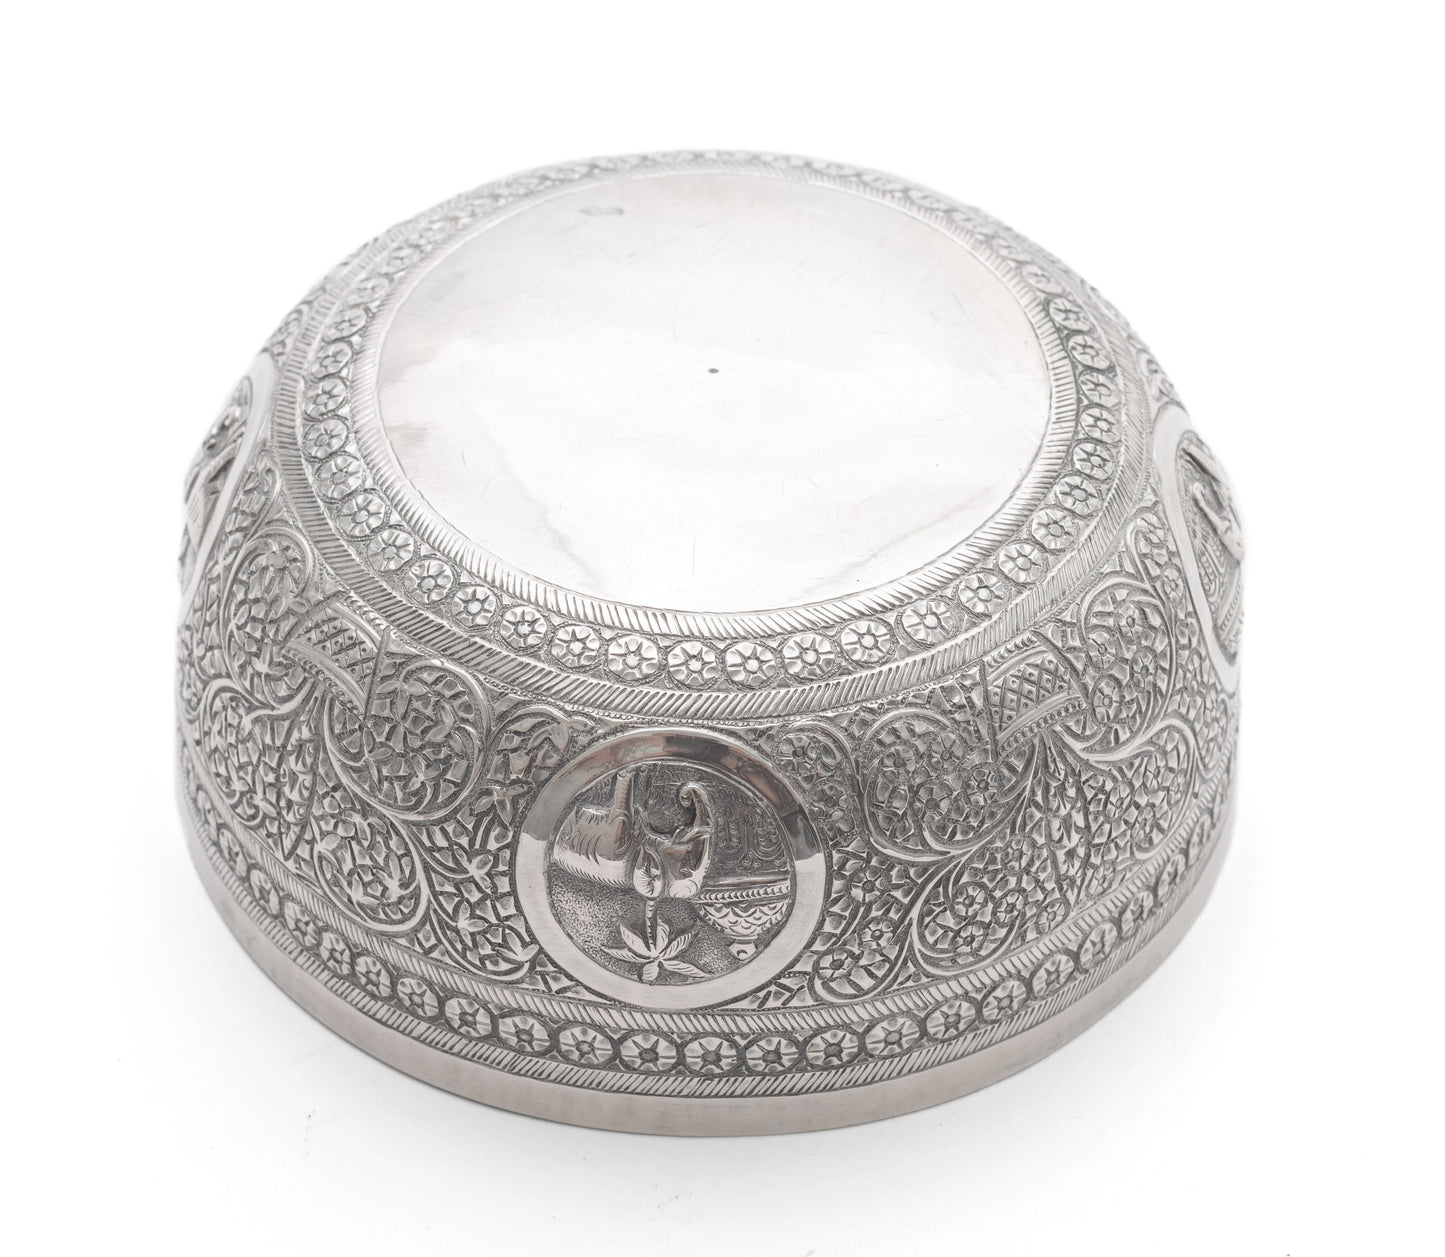 Antique Ceylonese (Sri Lankan) White Metal/Silver Repousse Offering Bowl c1900 (Code 2117)